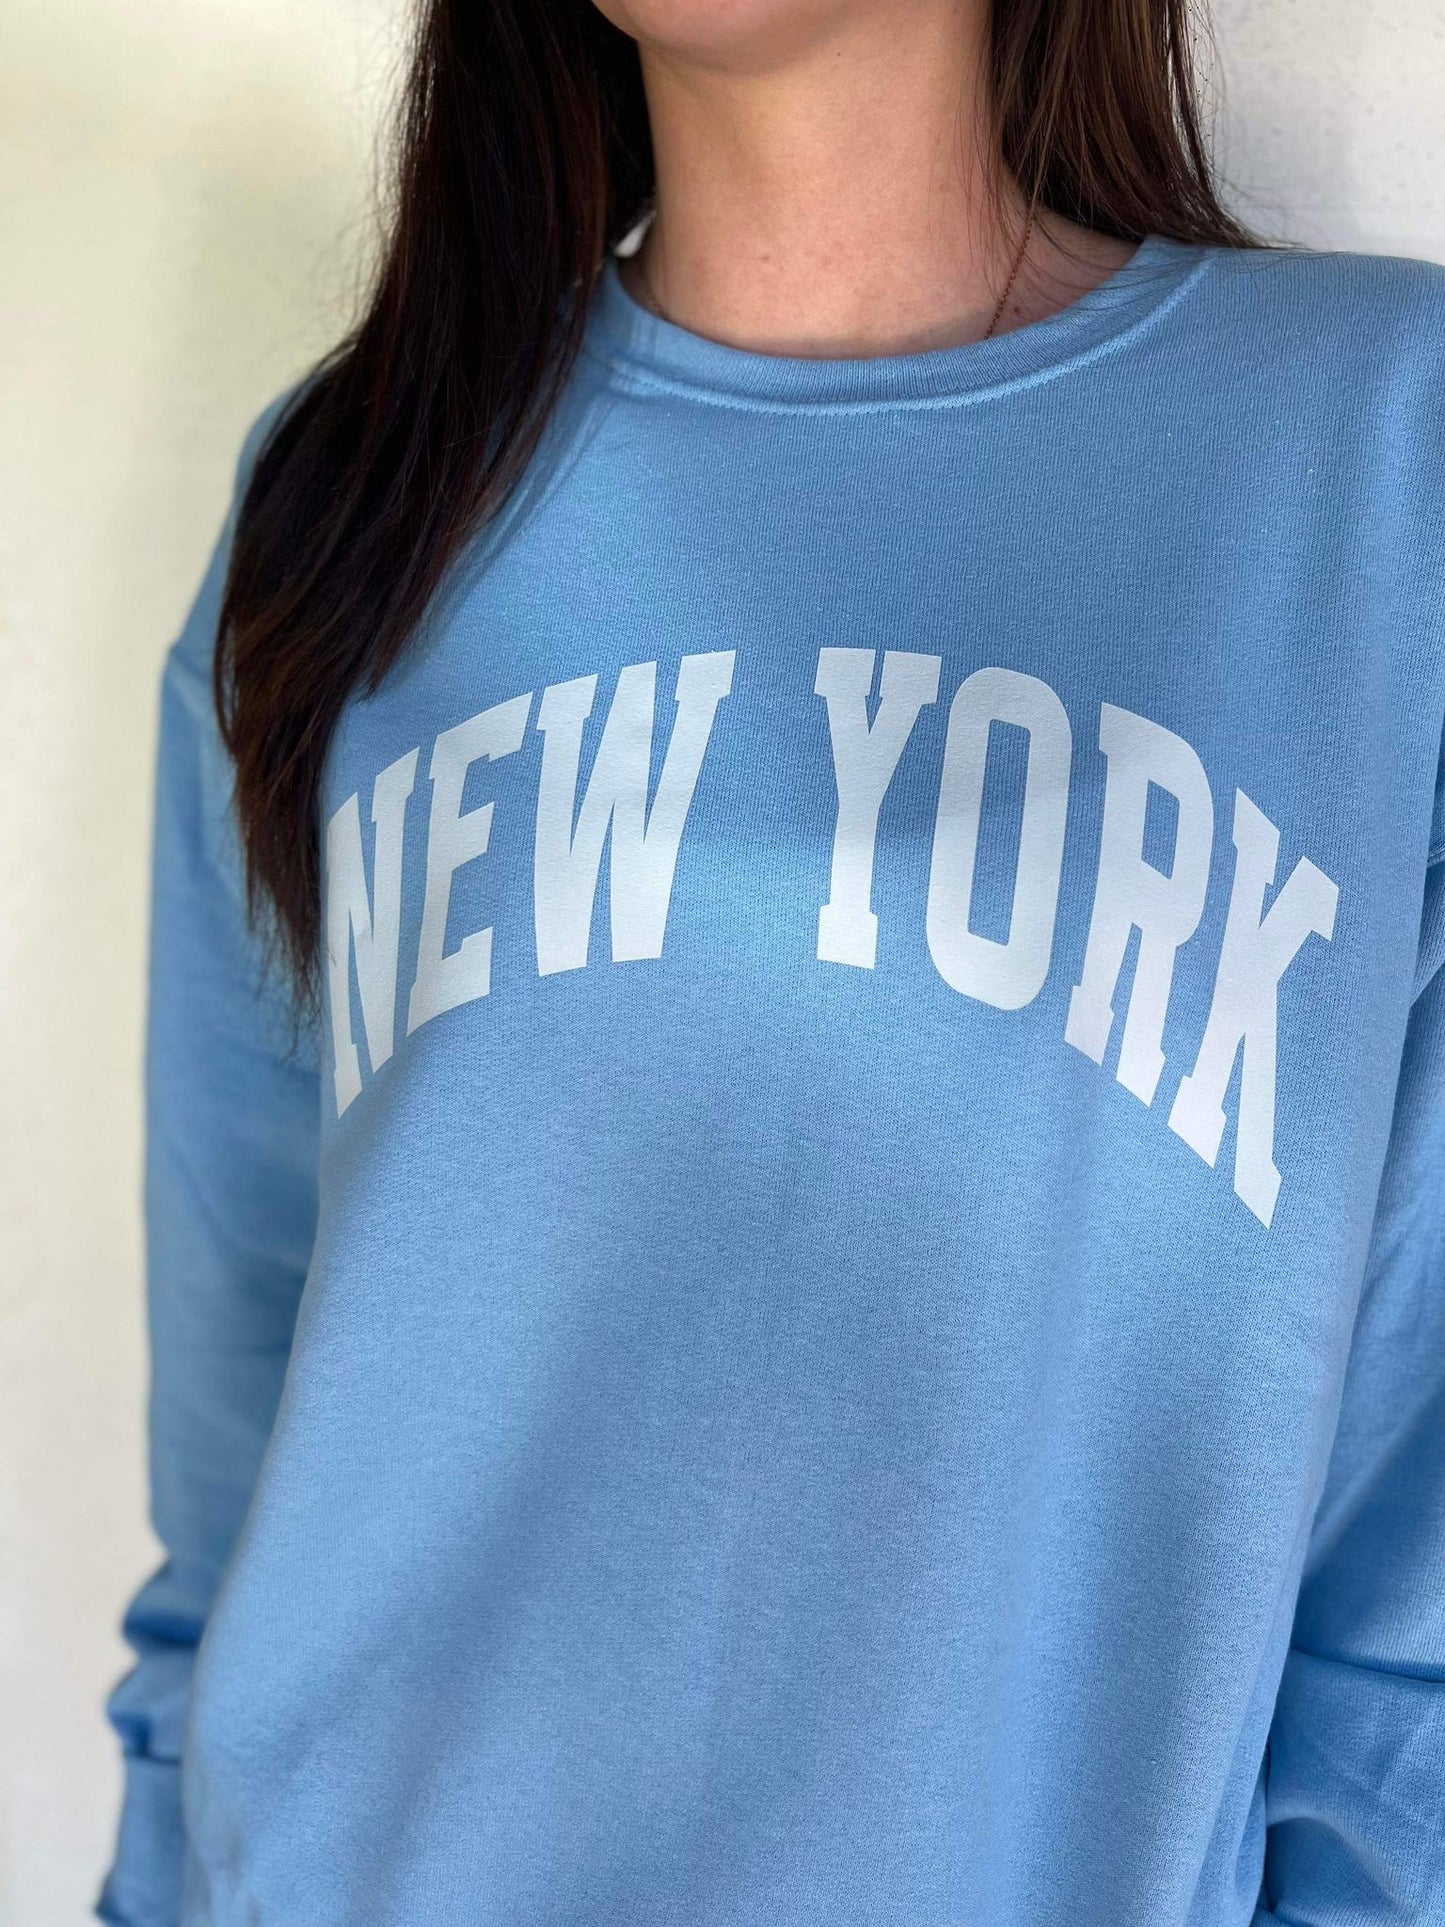 New York Sweatshirt- ASK Apparel LLC